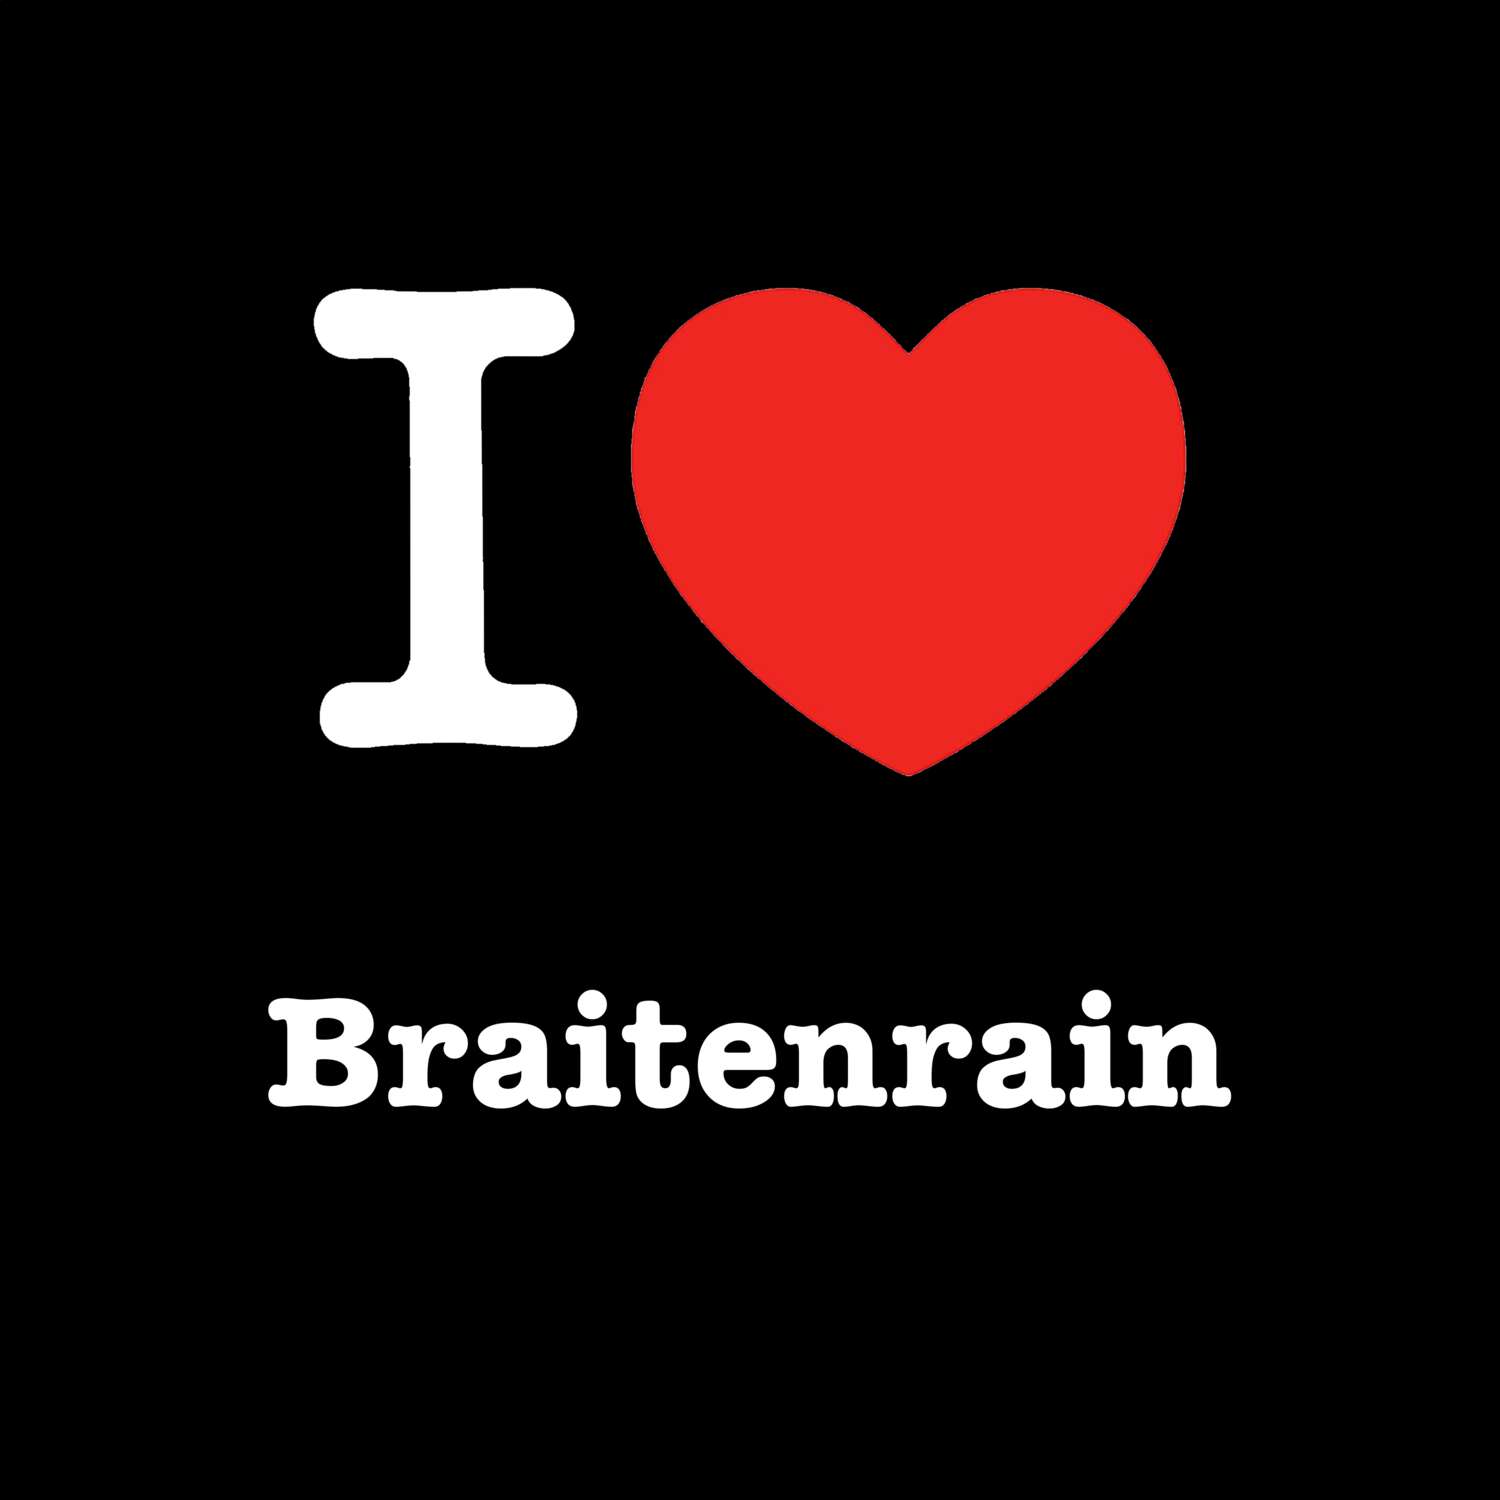 Braitenrain T-Shirt »I love«